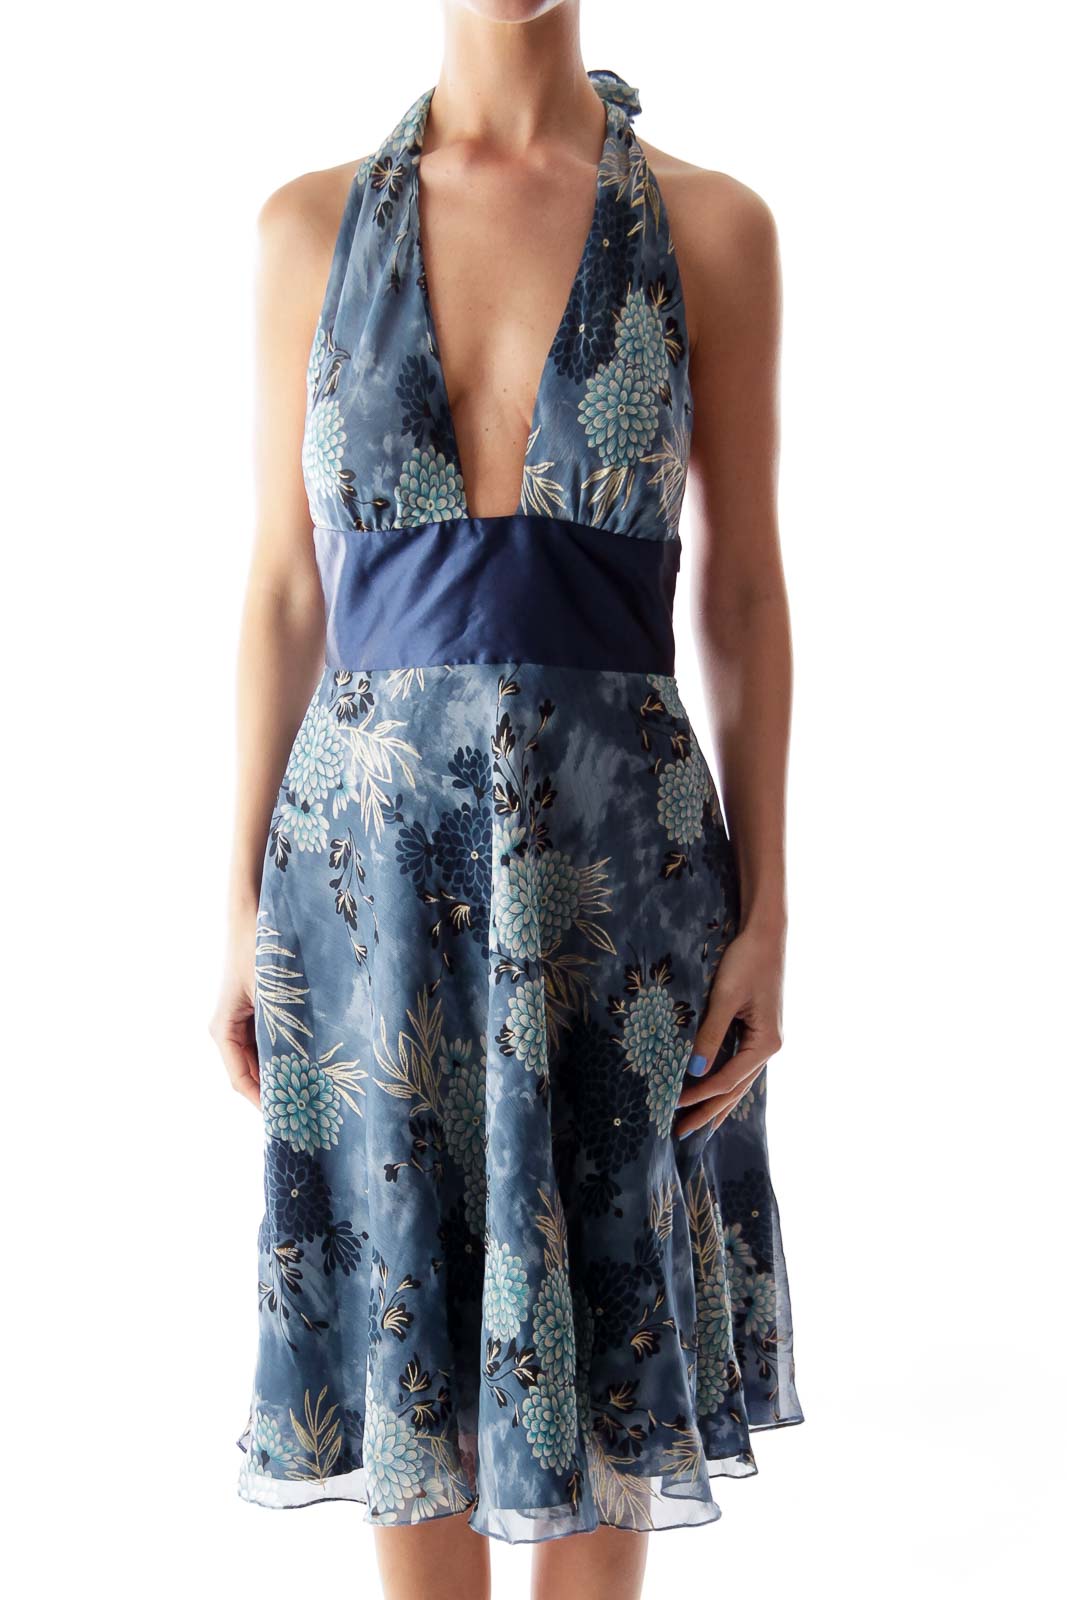 Blue Floral Print Dress Front